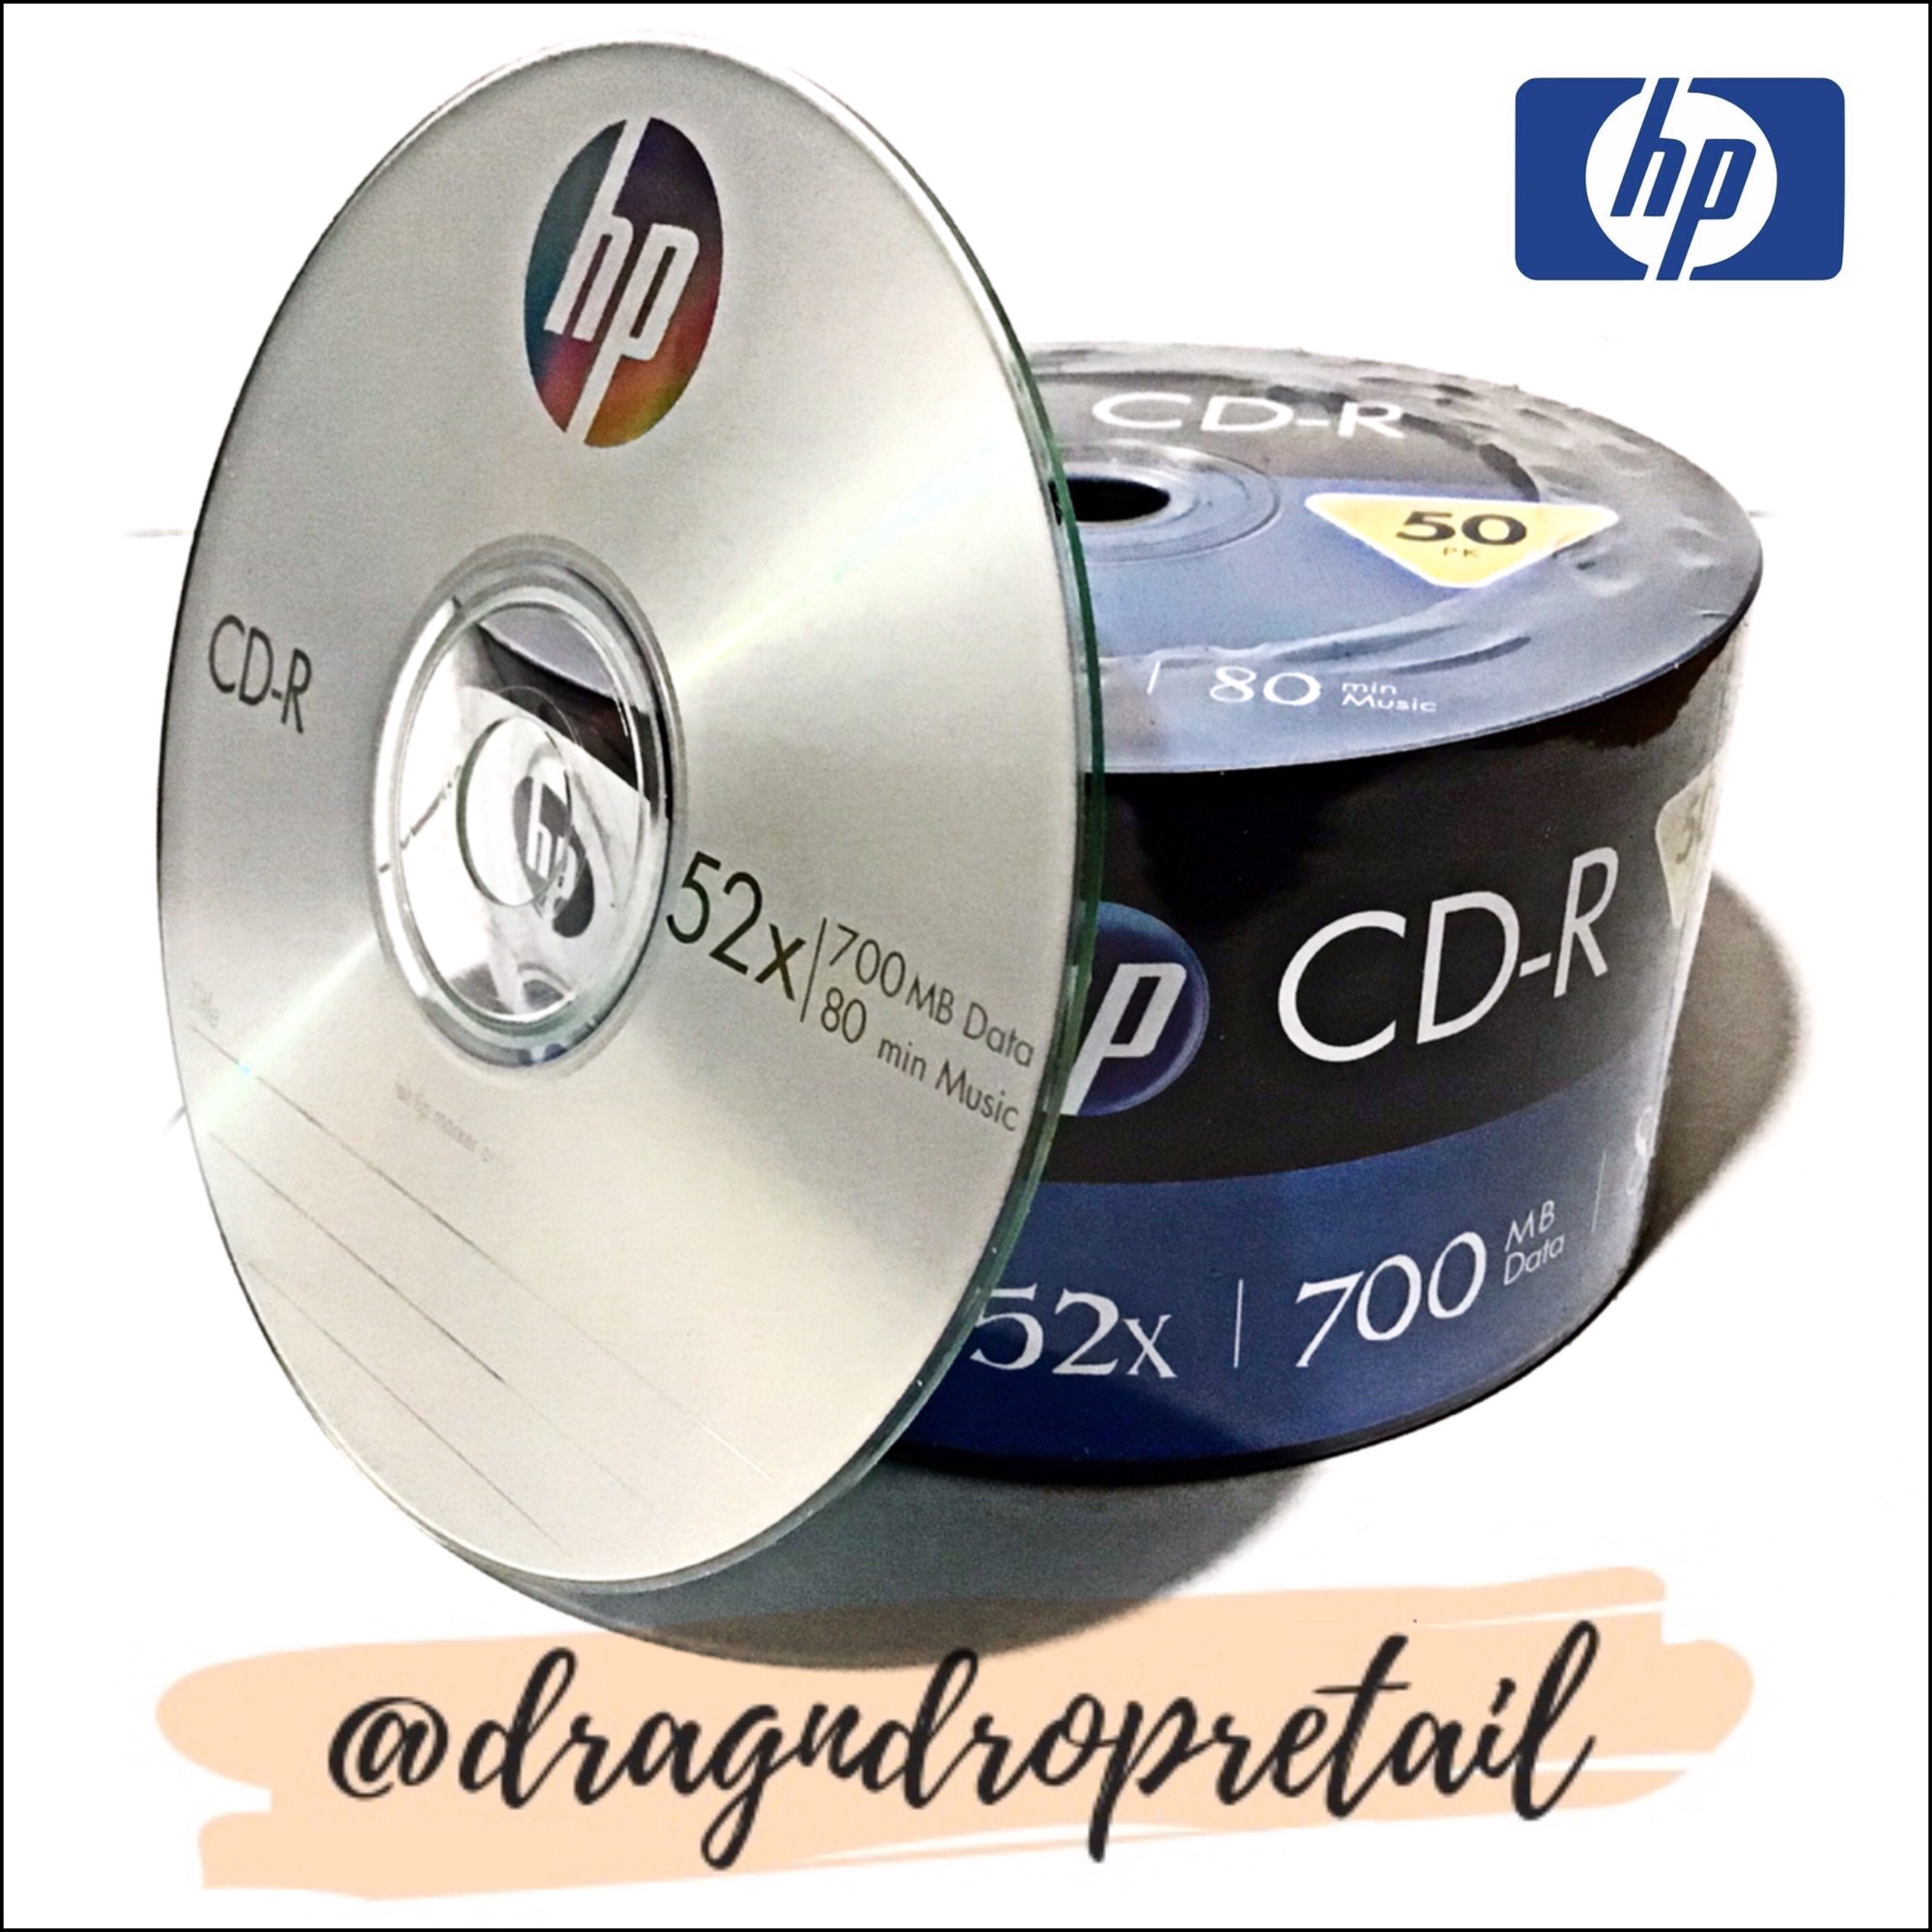 HP Cd-r 52x 700 MB Data 80 Min Music Video 100 PK for sale online 